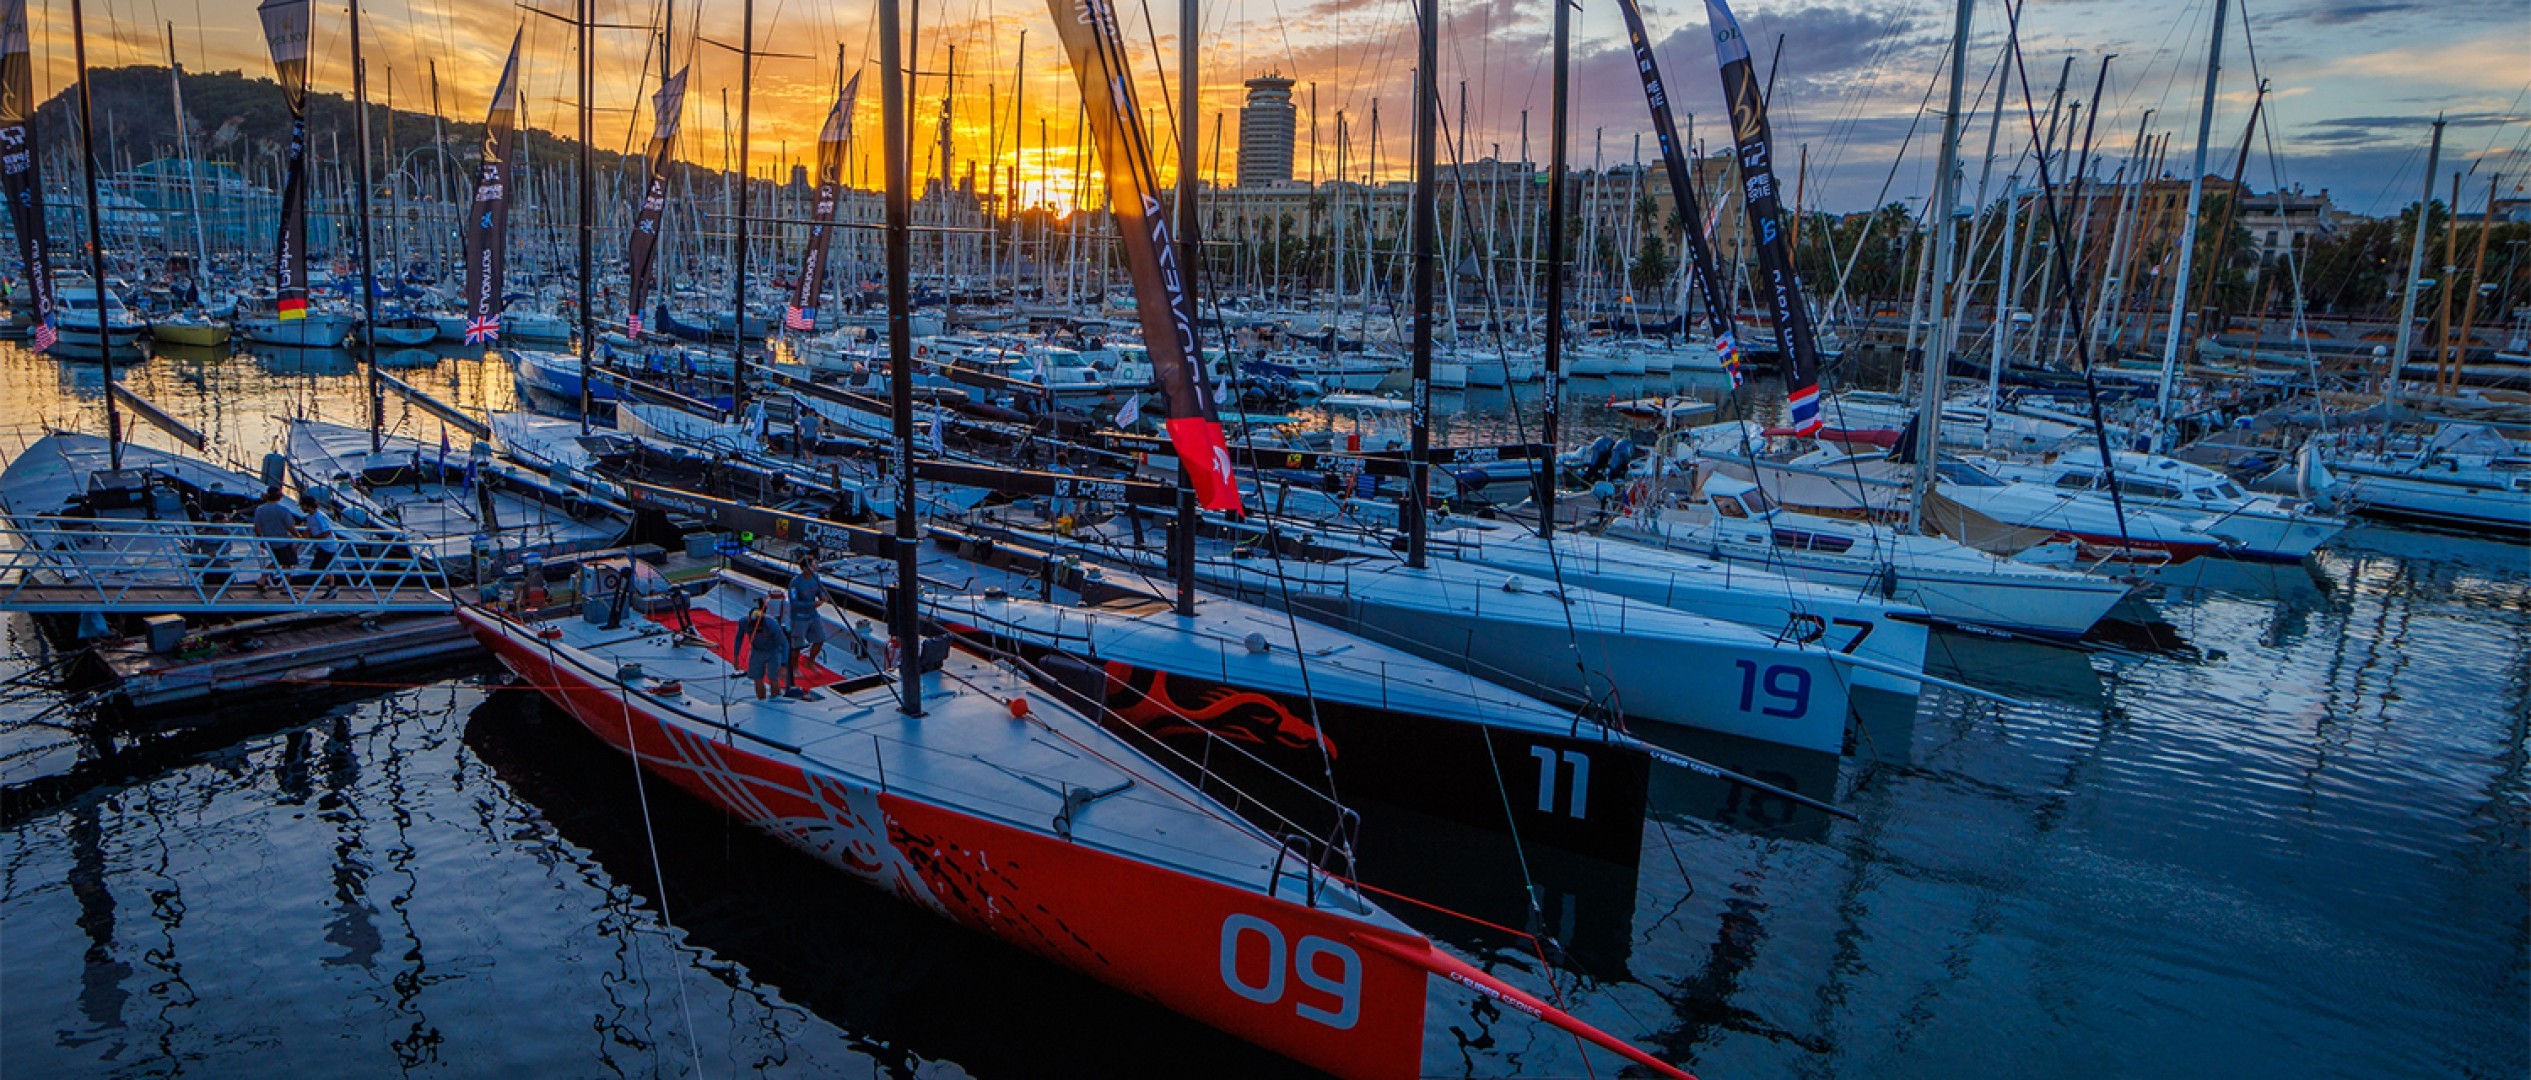 52 Super Series Barcelona Sailing Week: no racing today